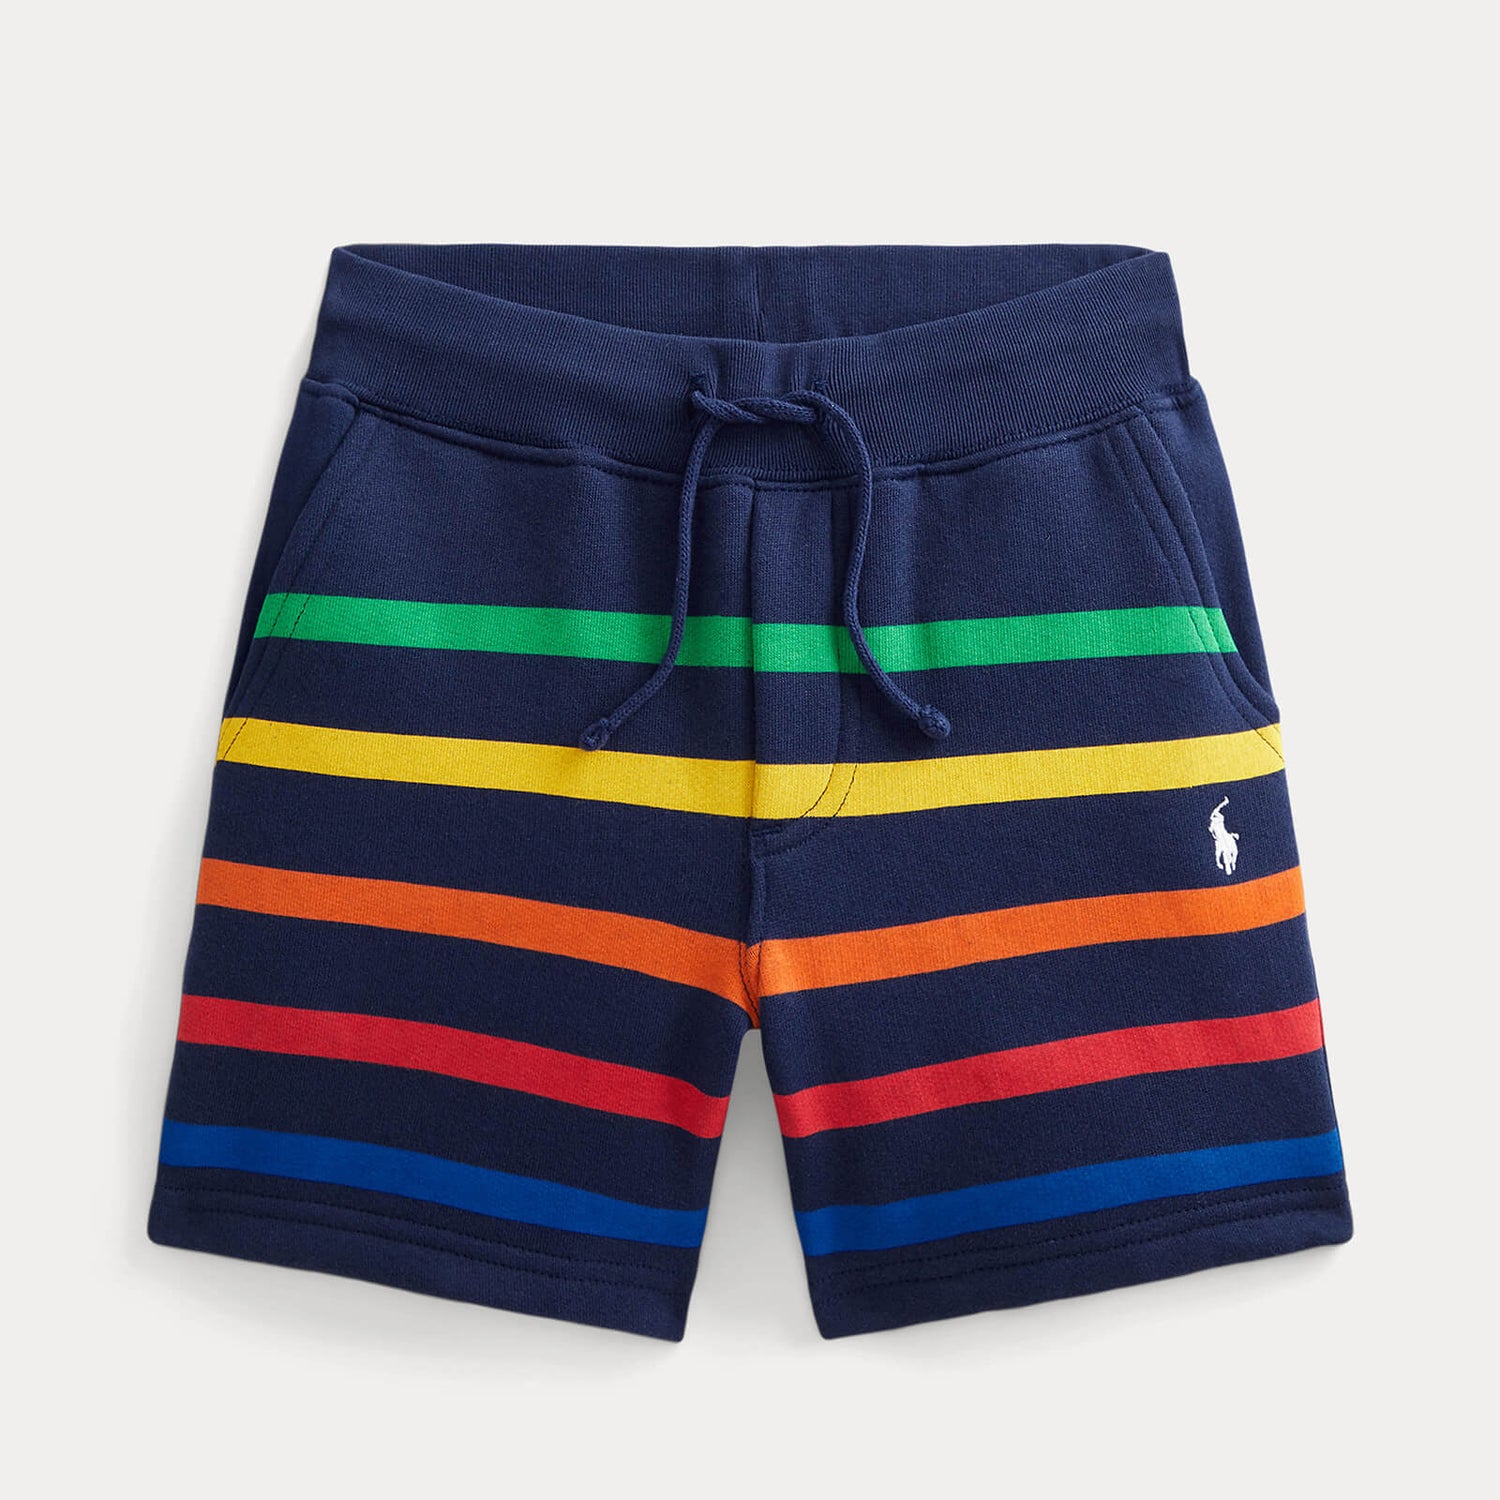 Ralph Lauren Boys Striped Athletic Shorts - Newport Navy Multi - 5 Years